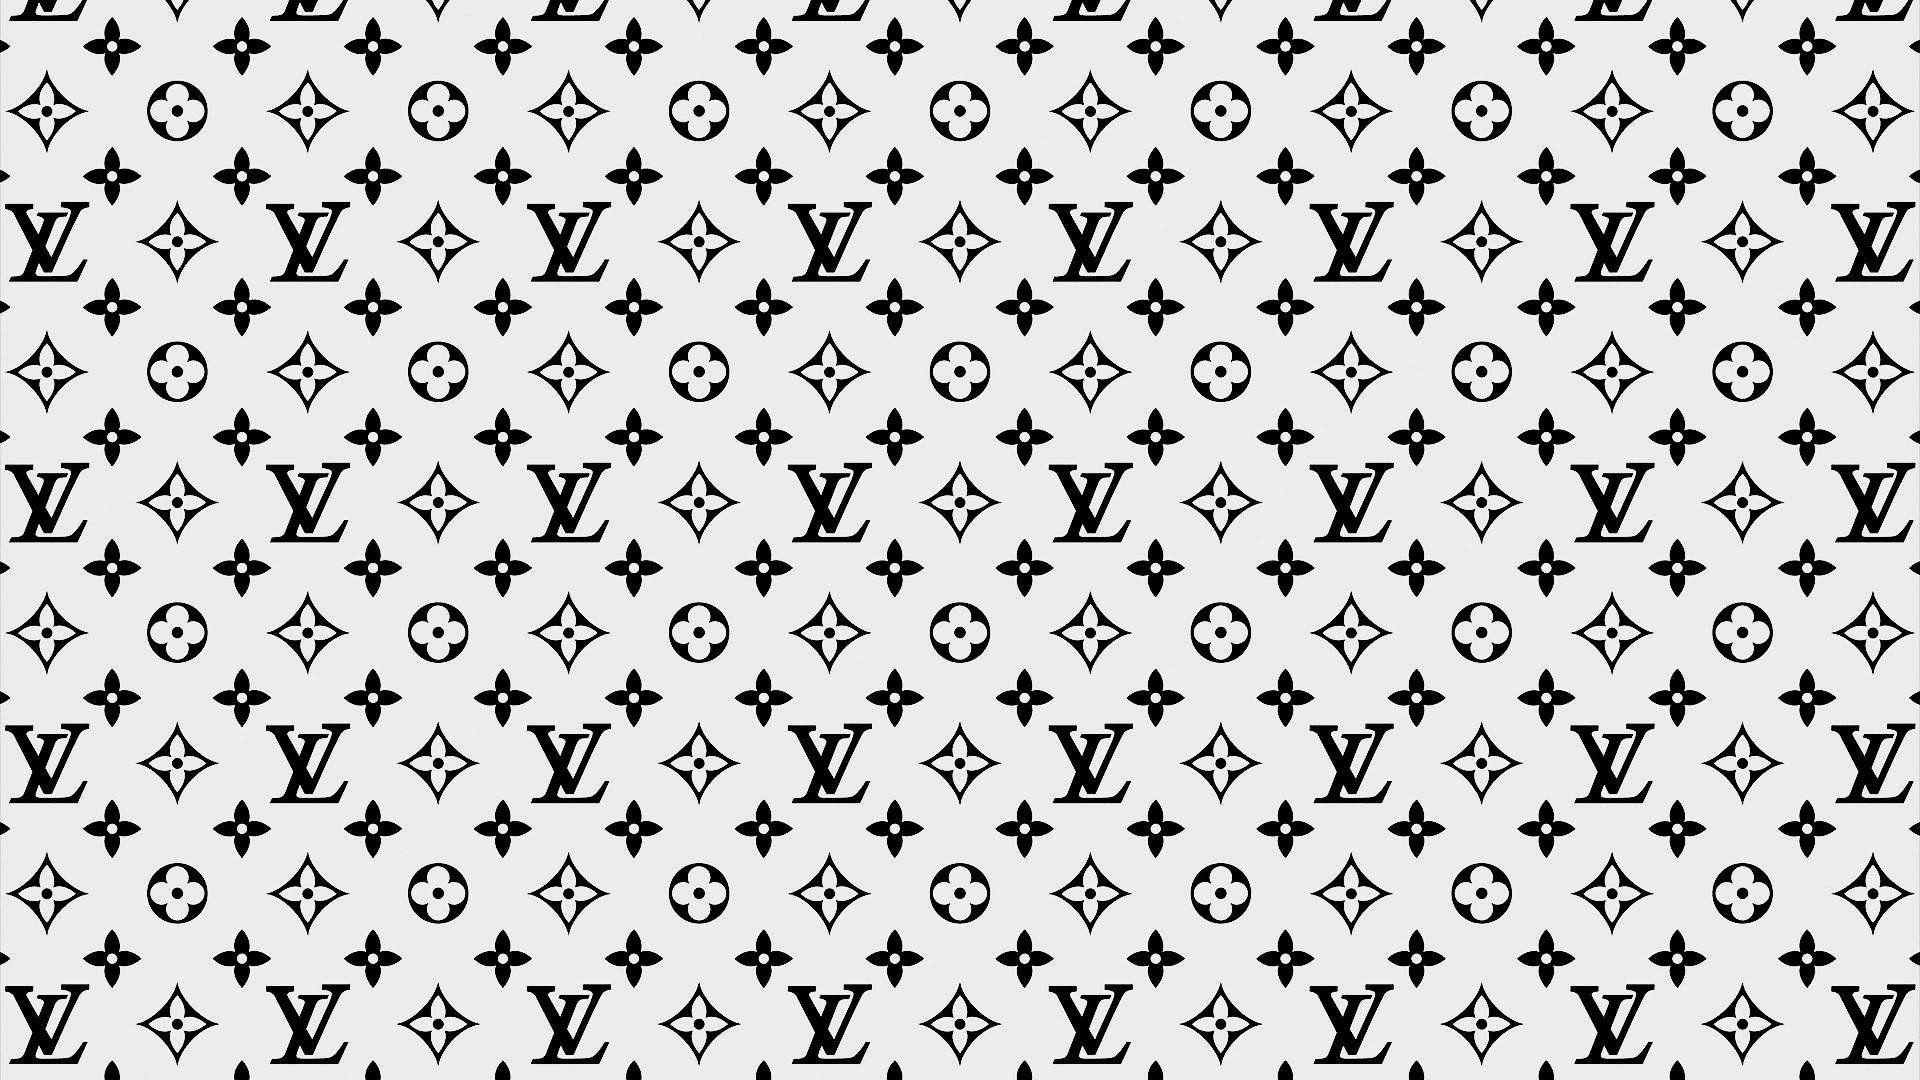 Supreme X Louis Vuitton Wallpapers - Top Free Supreme X Louis Vuitton Backgrounds - WallpaperAccess